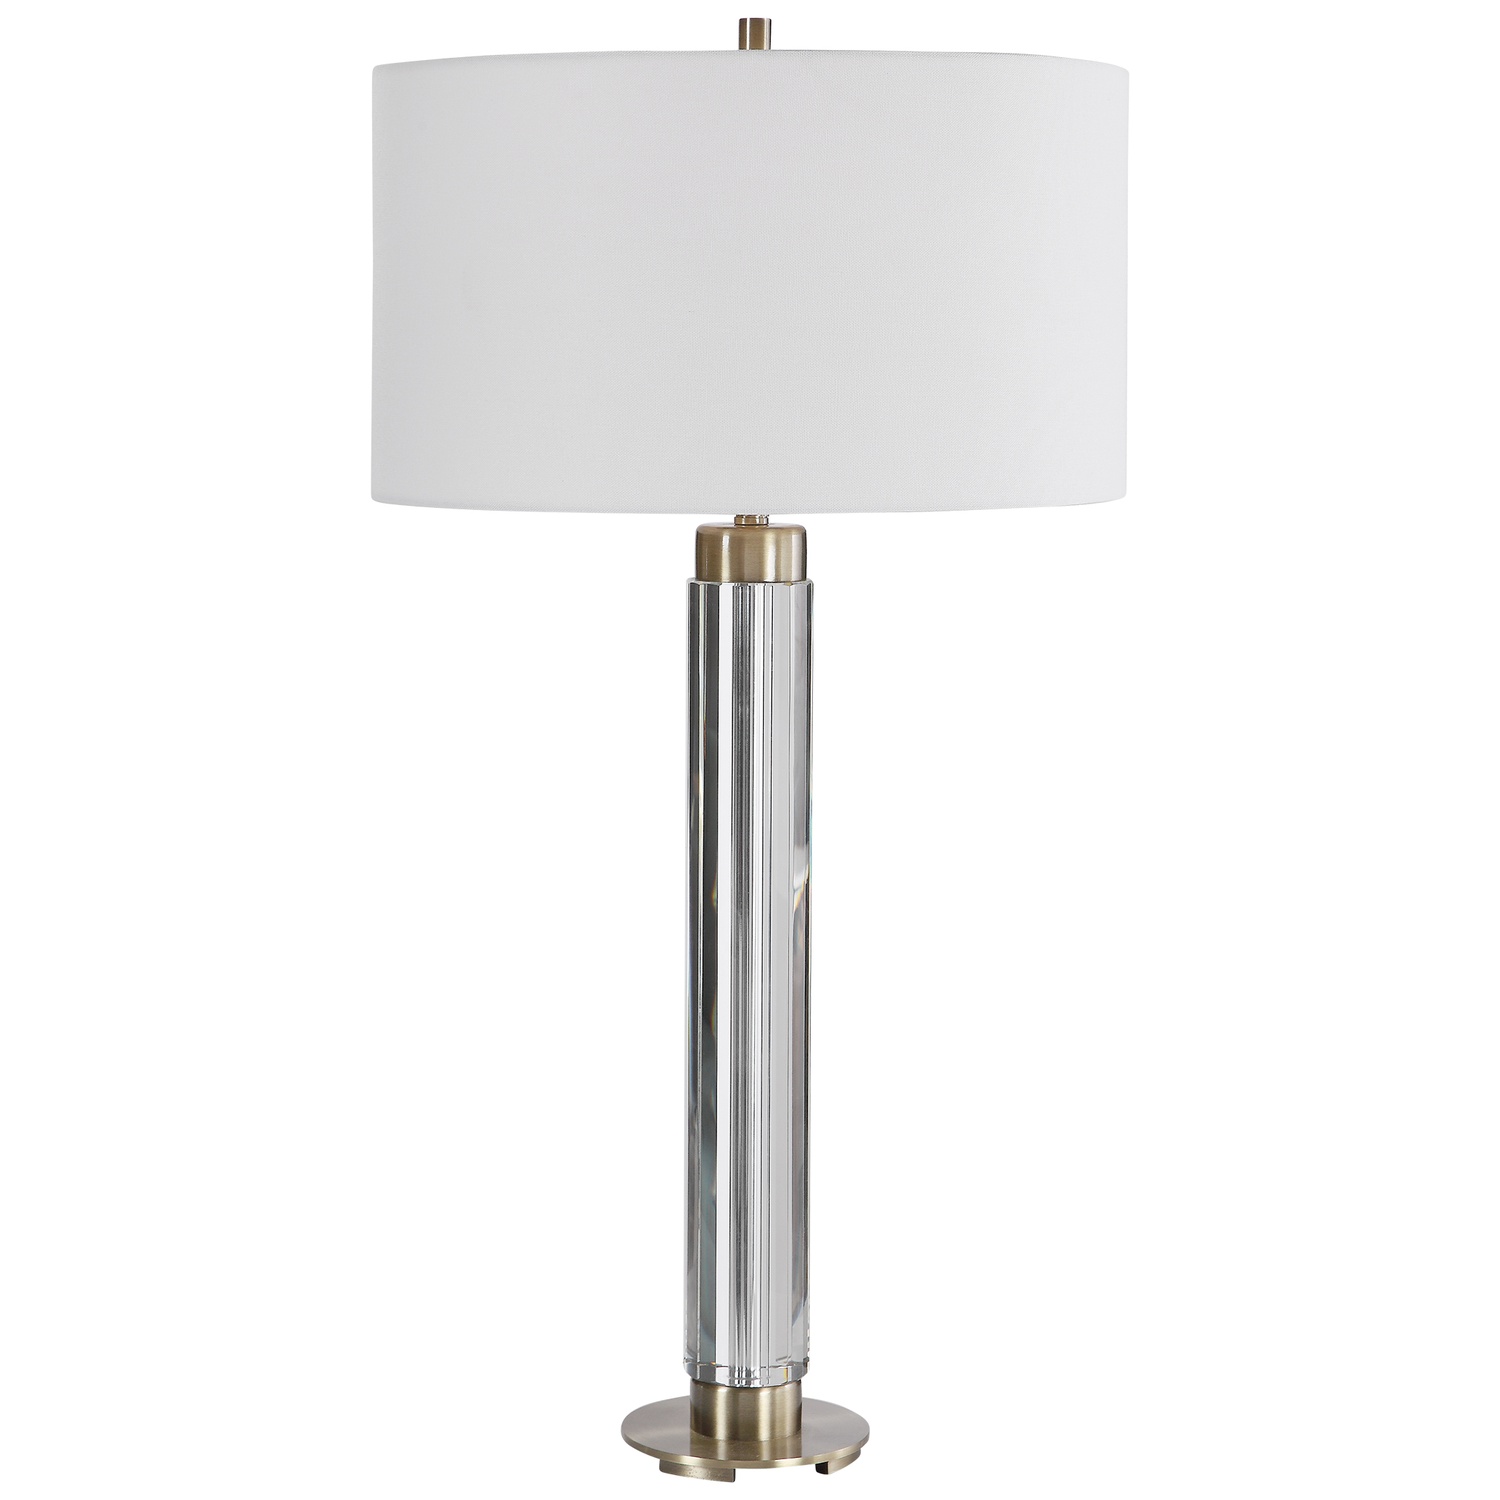 Davies-Davies Modern Table Lamp